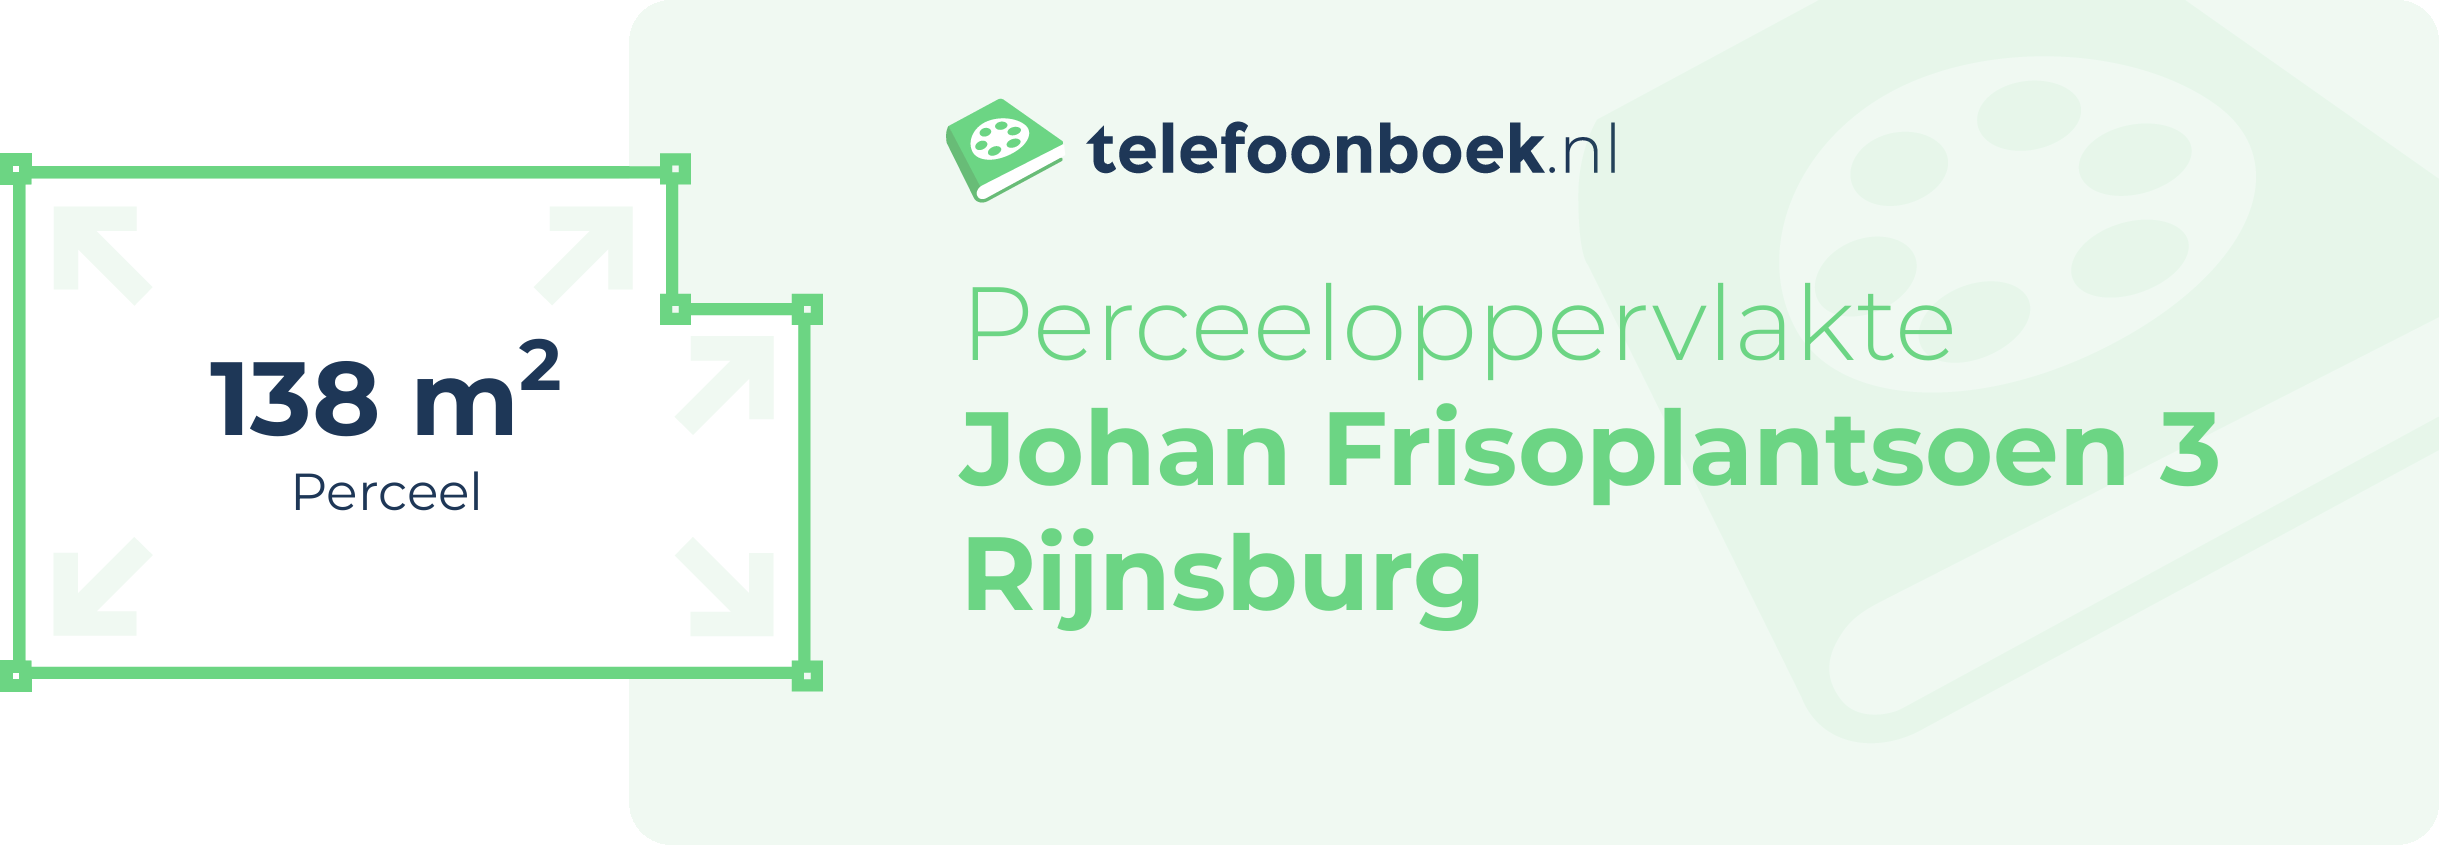 Perceeloppervlakte Johan Frisoplantsoen 3 Rijnsburg